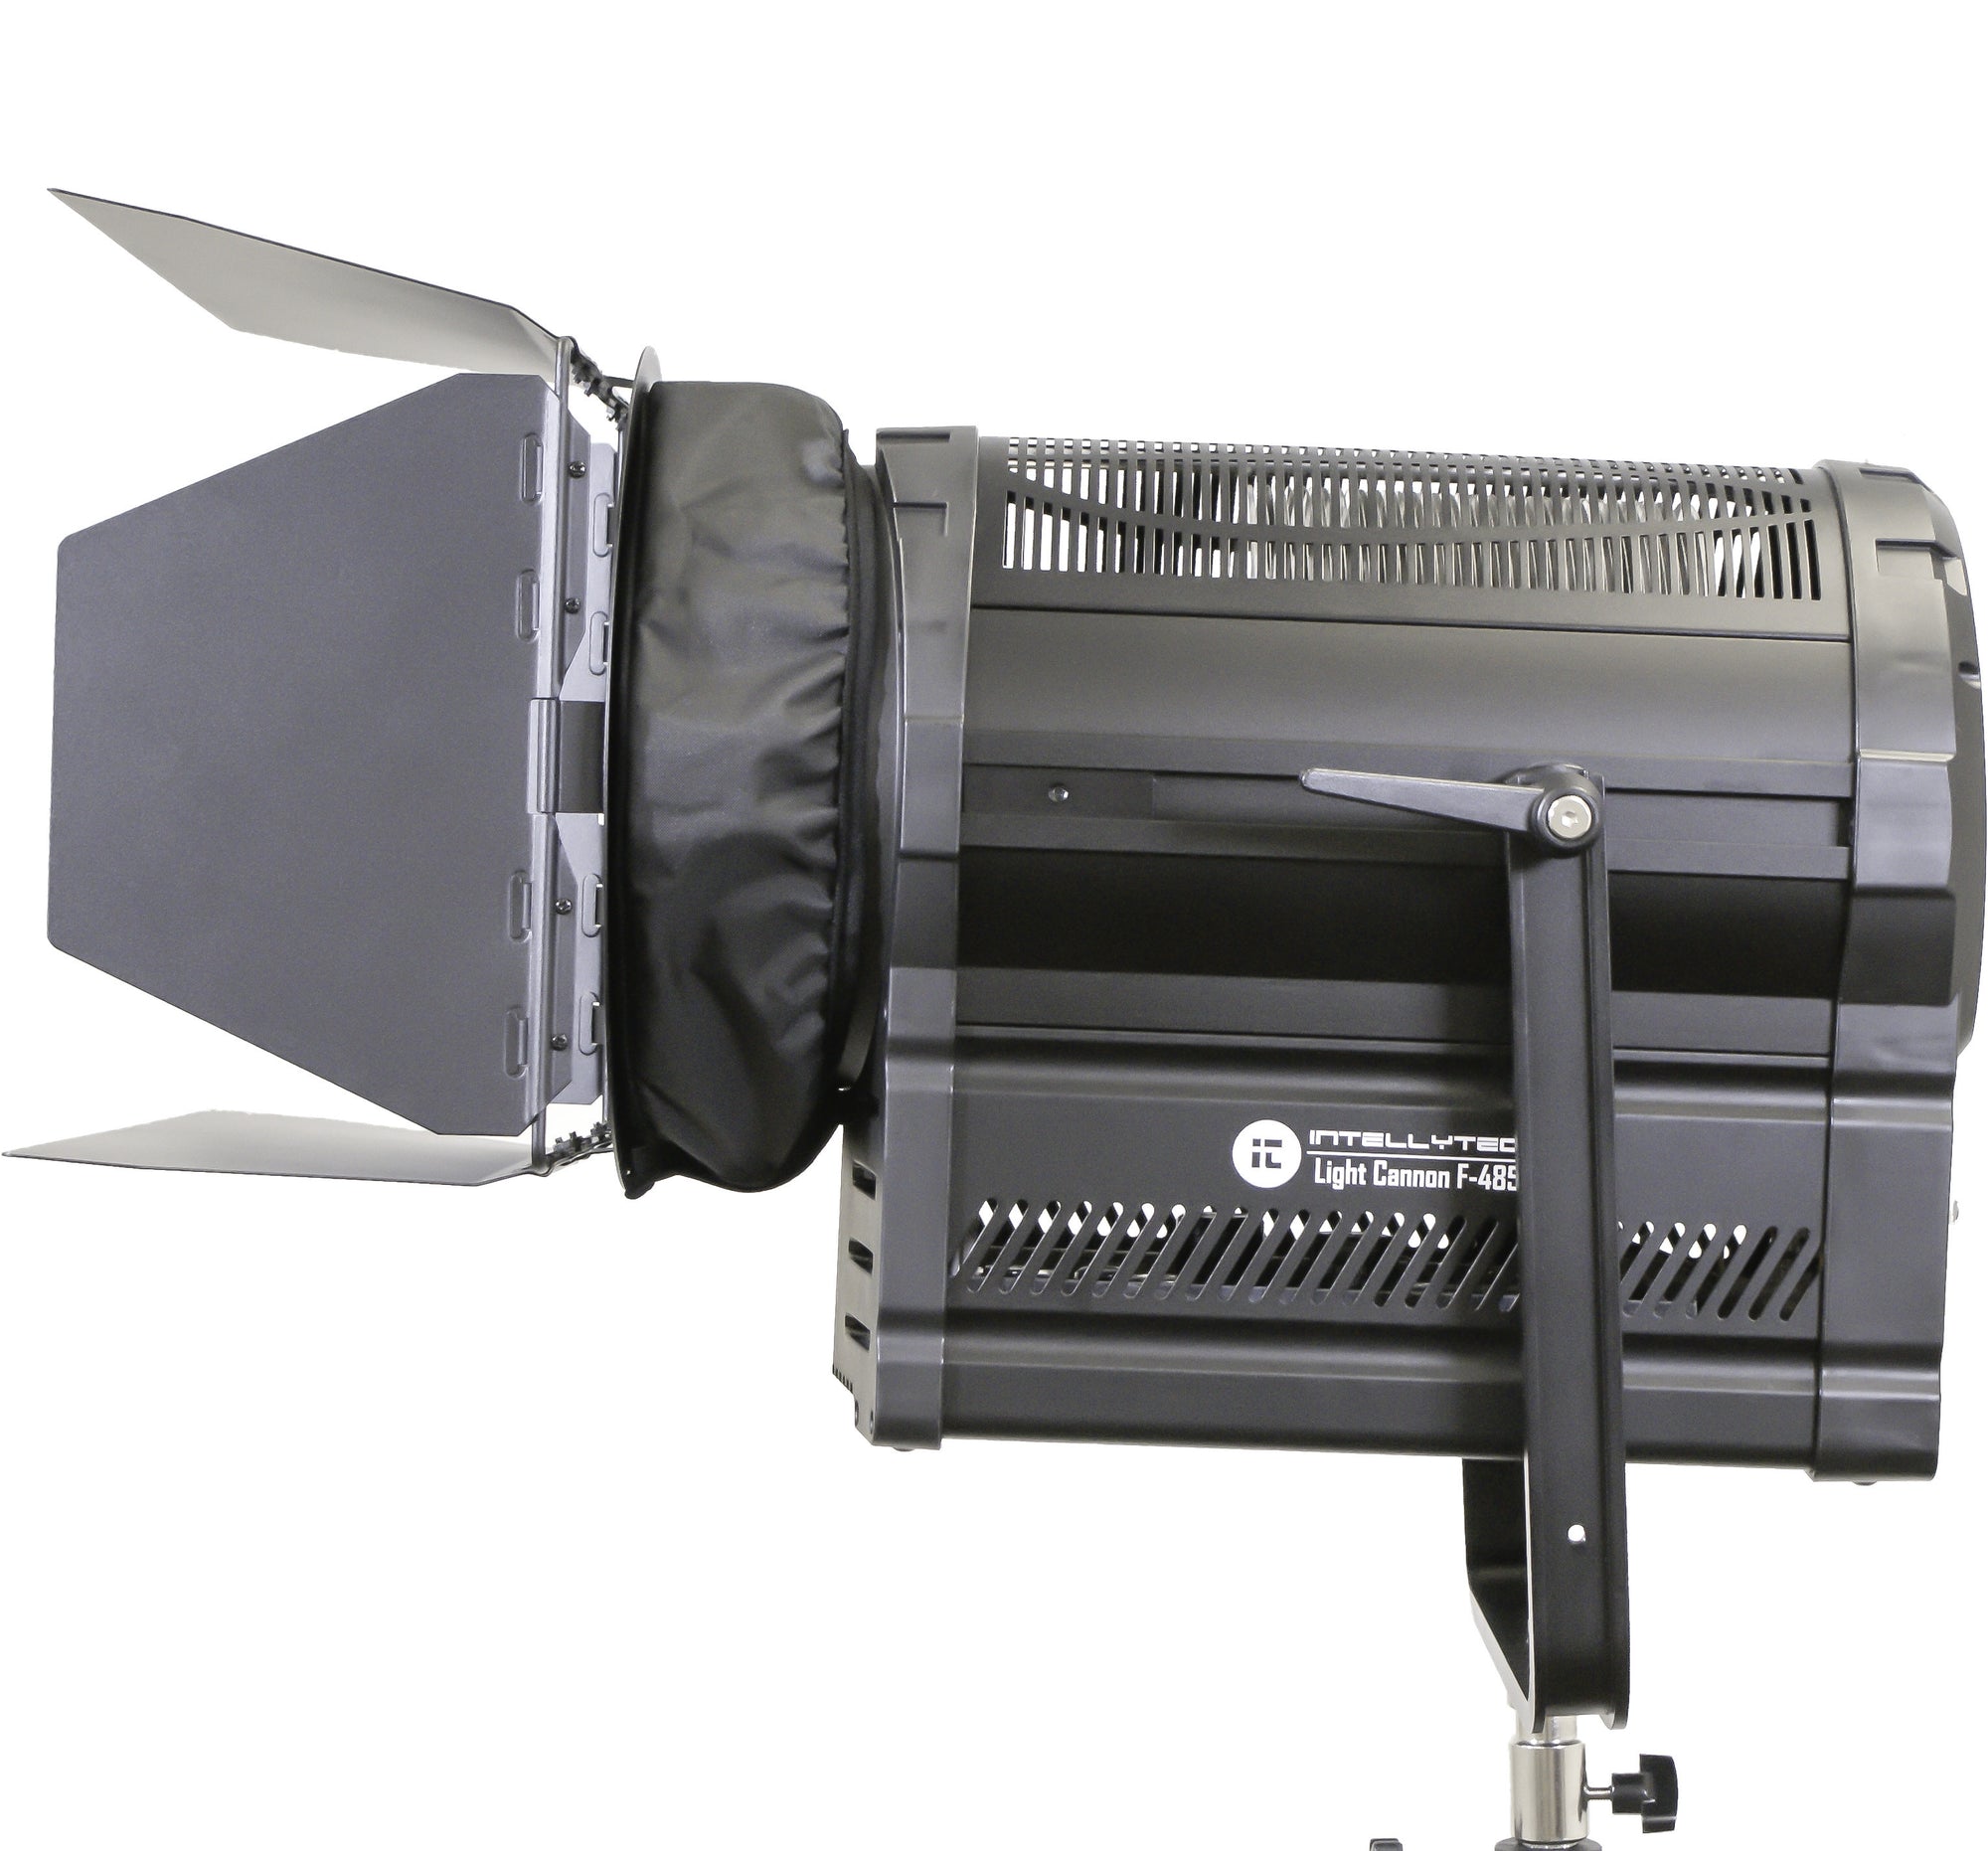 Light Cannon F-300 5500k - High Output 300W LED 7" Fresnel - W/ Wifi